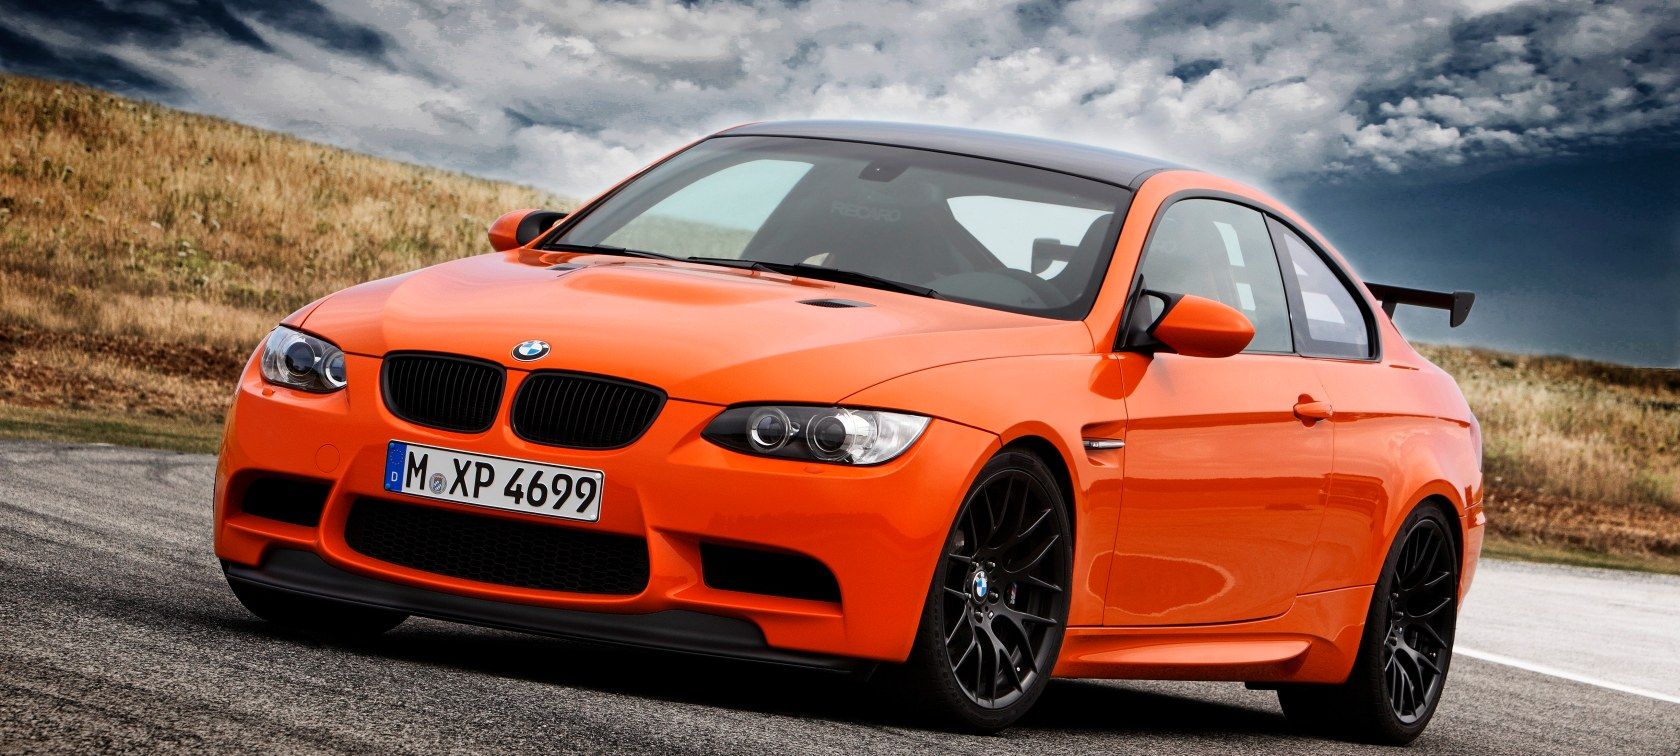 Orange 2010 BMW M3 GTS